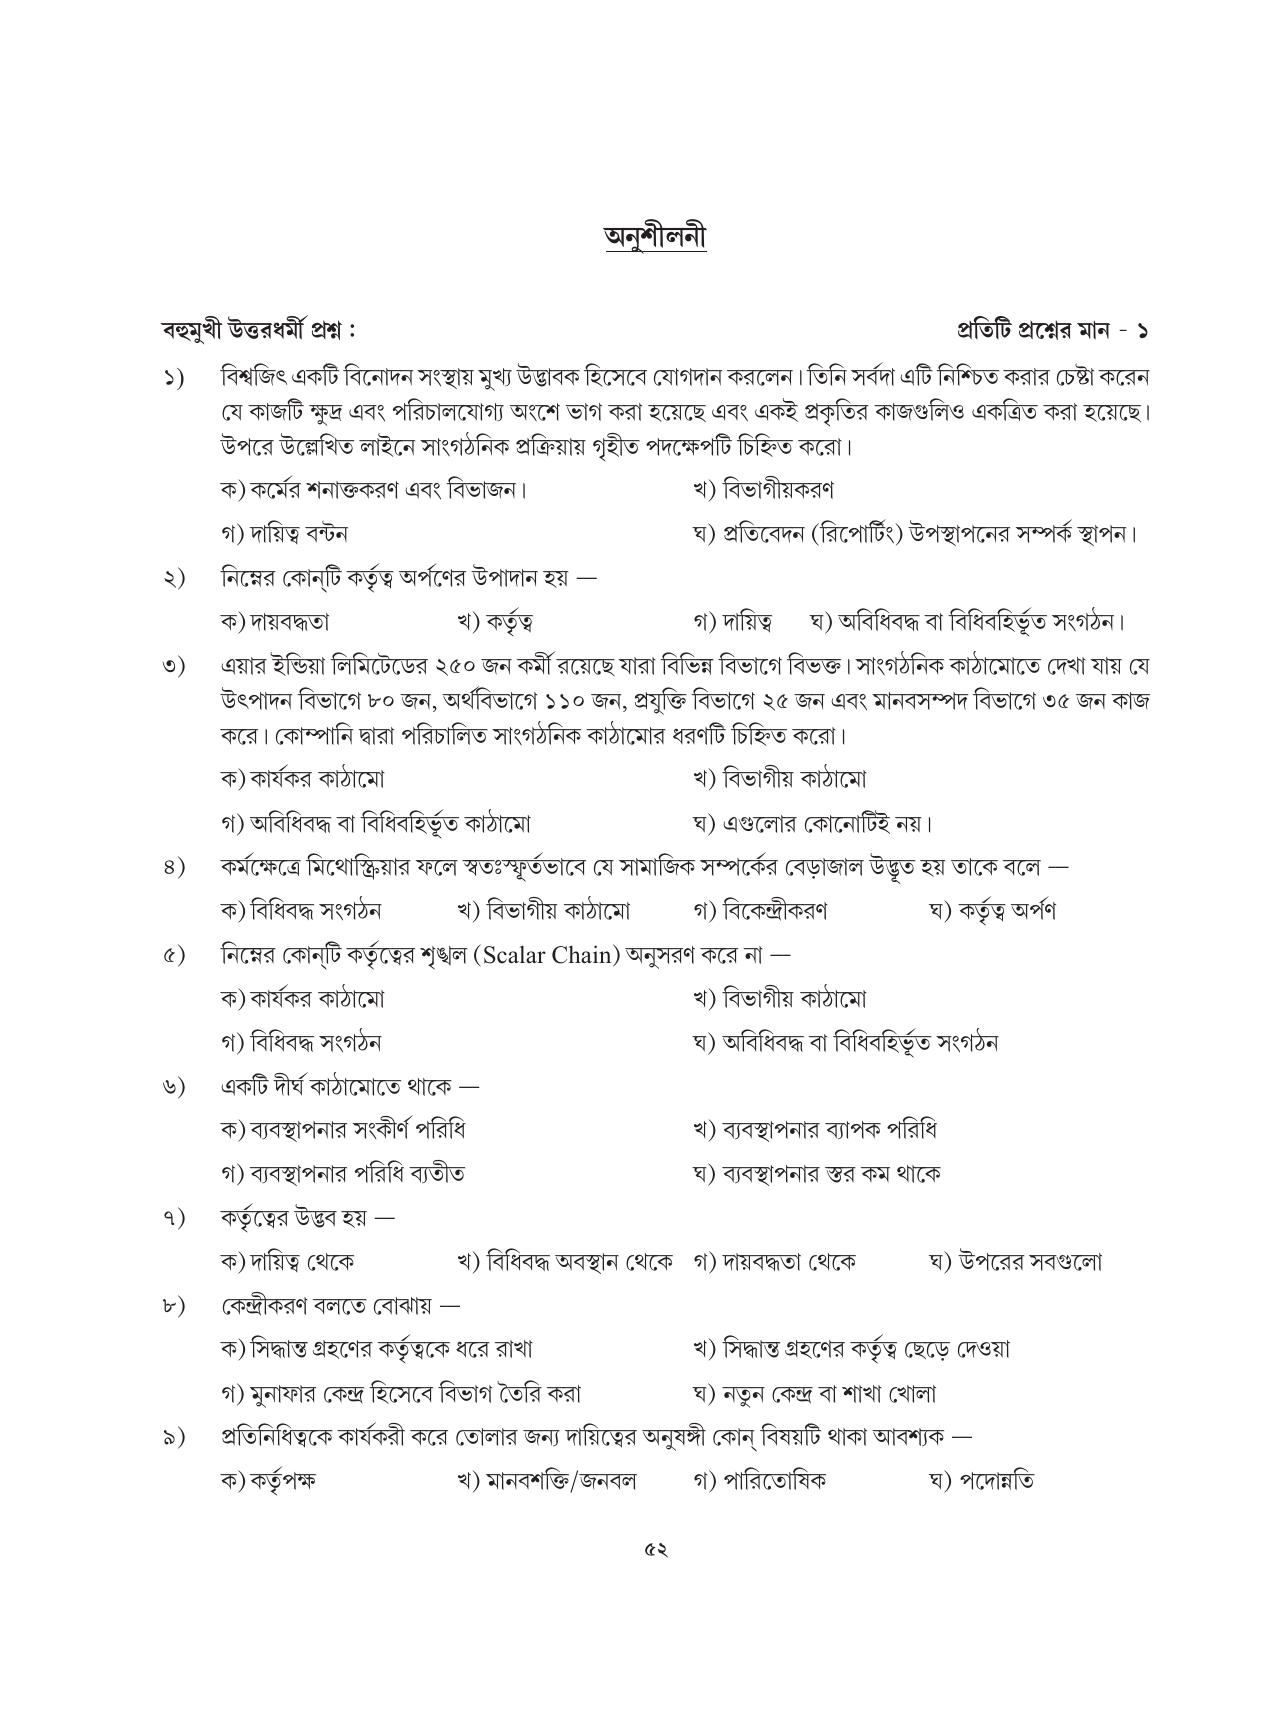 Tripura Board Class 12 Karbari Shastra Bengali Version Workbooks - Page 52